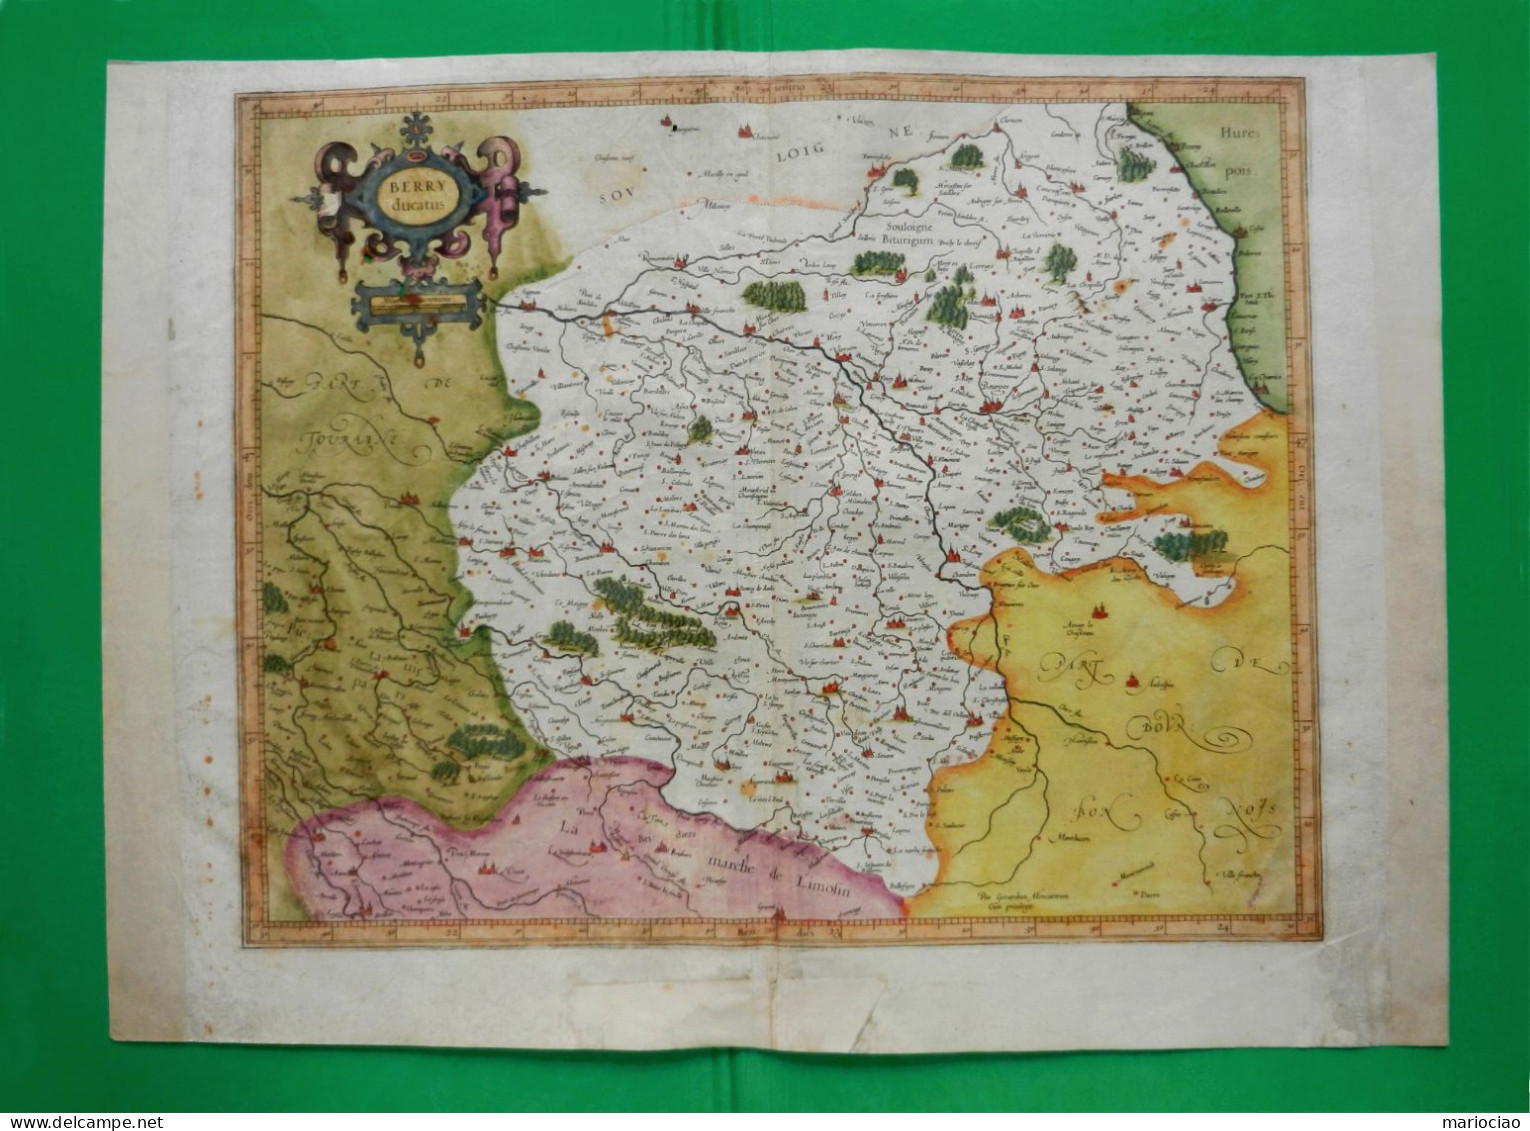 ST-FR BERRY DUCATUS 1610 Mercator-Hondius -BOURGES, Cher, Indre, Vienne cm 52,5x39